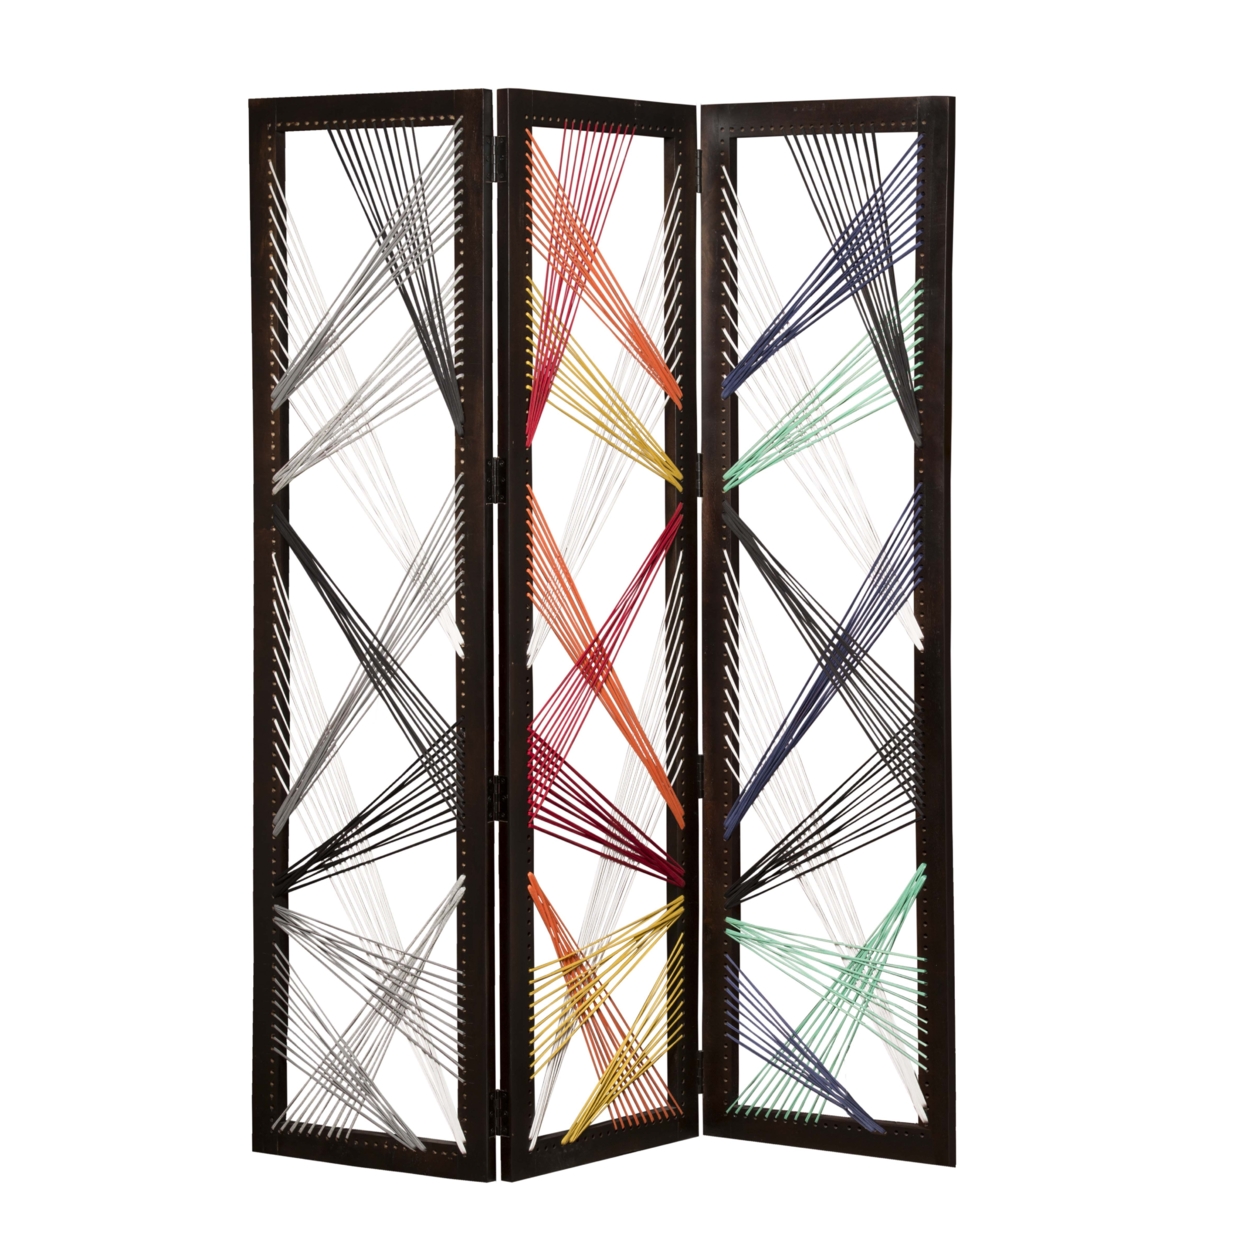 Contemporary 3 Panel Wooden Screen With Woven String Design, Multicolor- Saltoro Sherpi